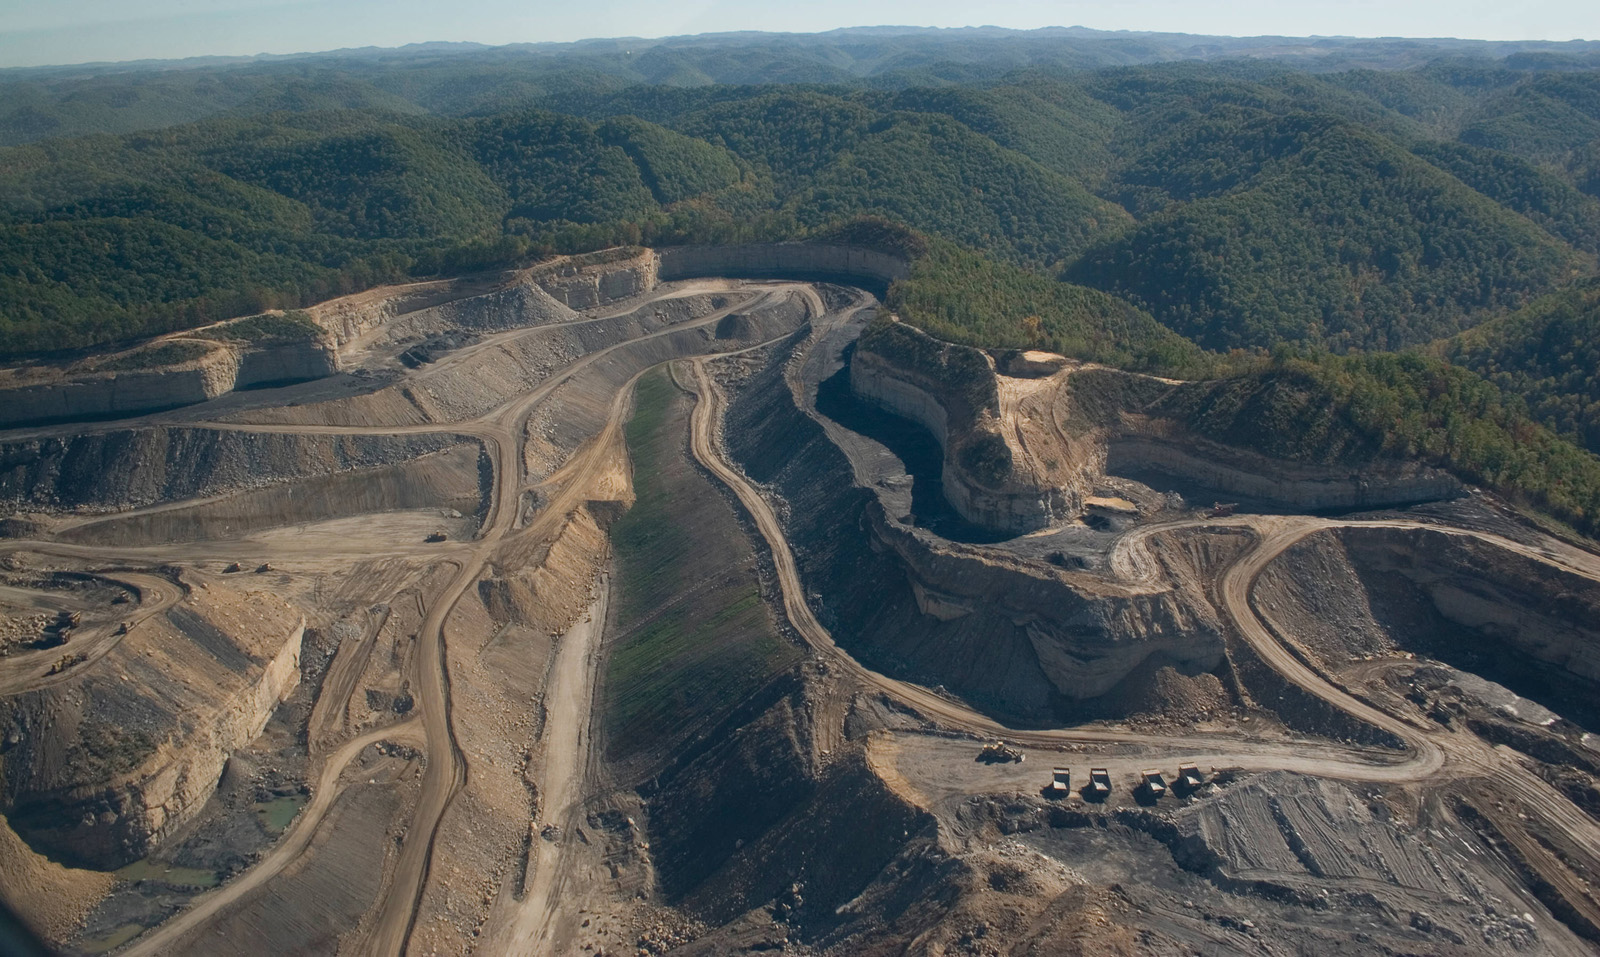 Open pit coal mine